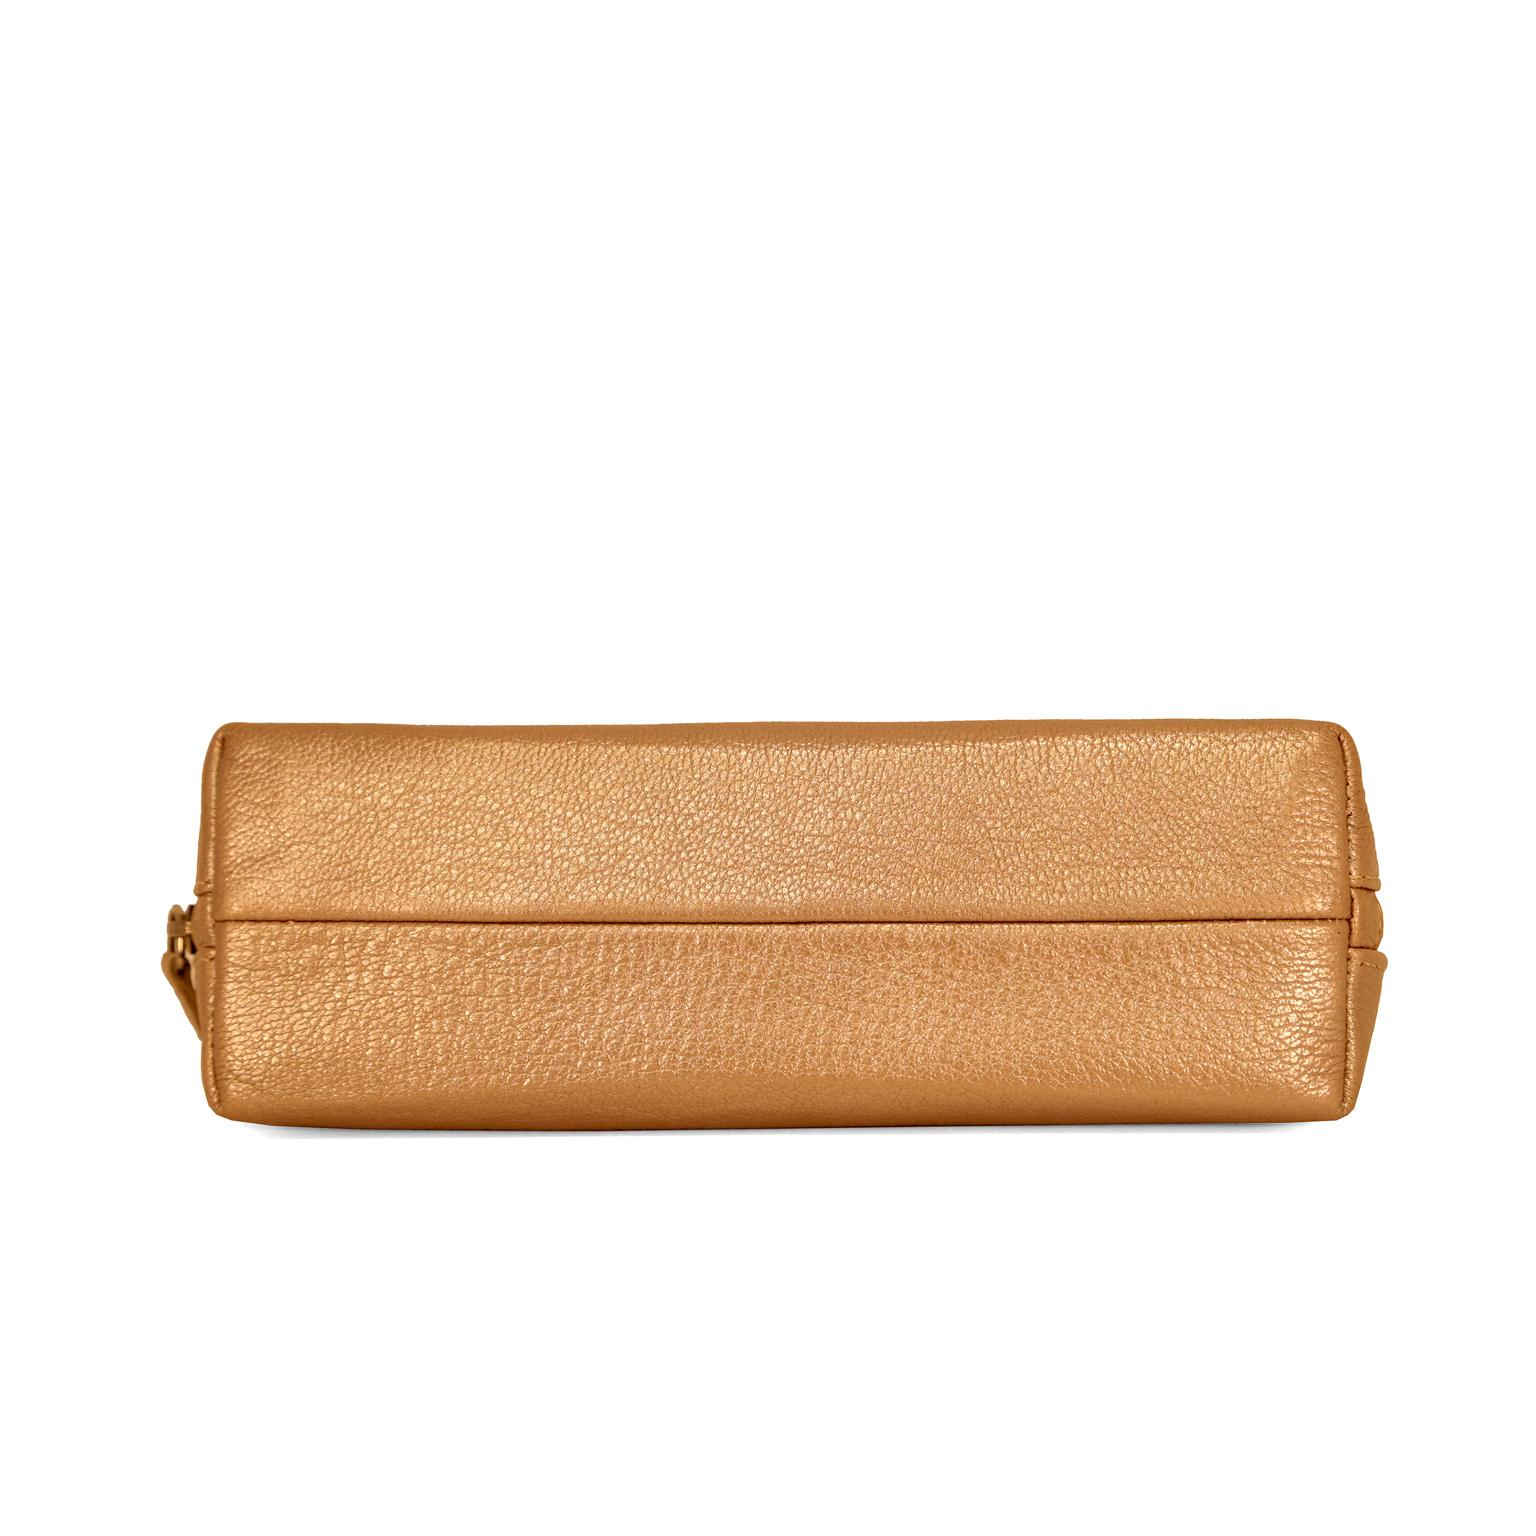 gold makeup pouch